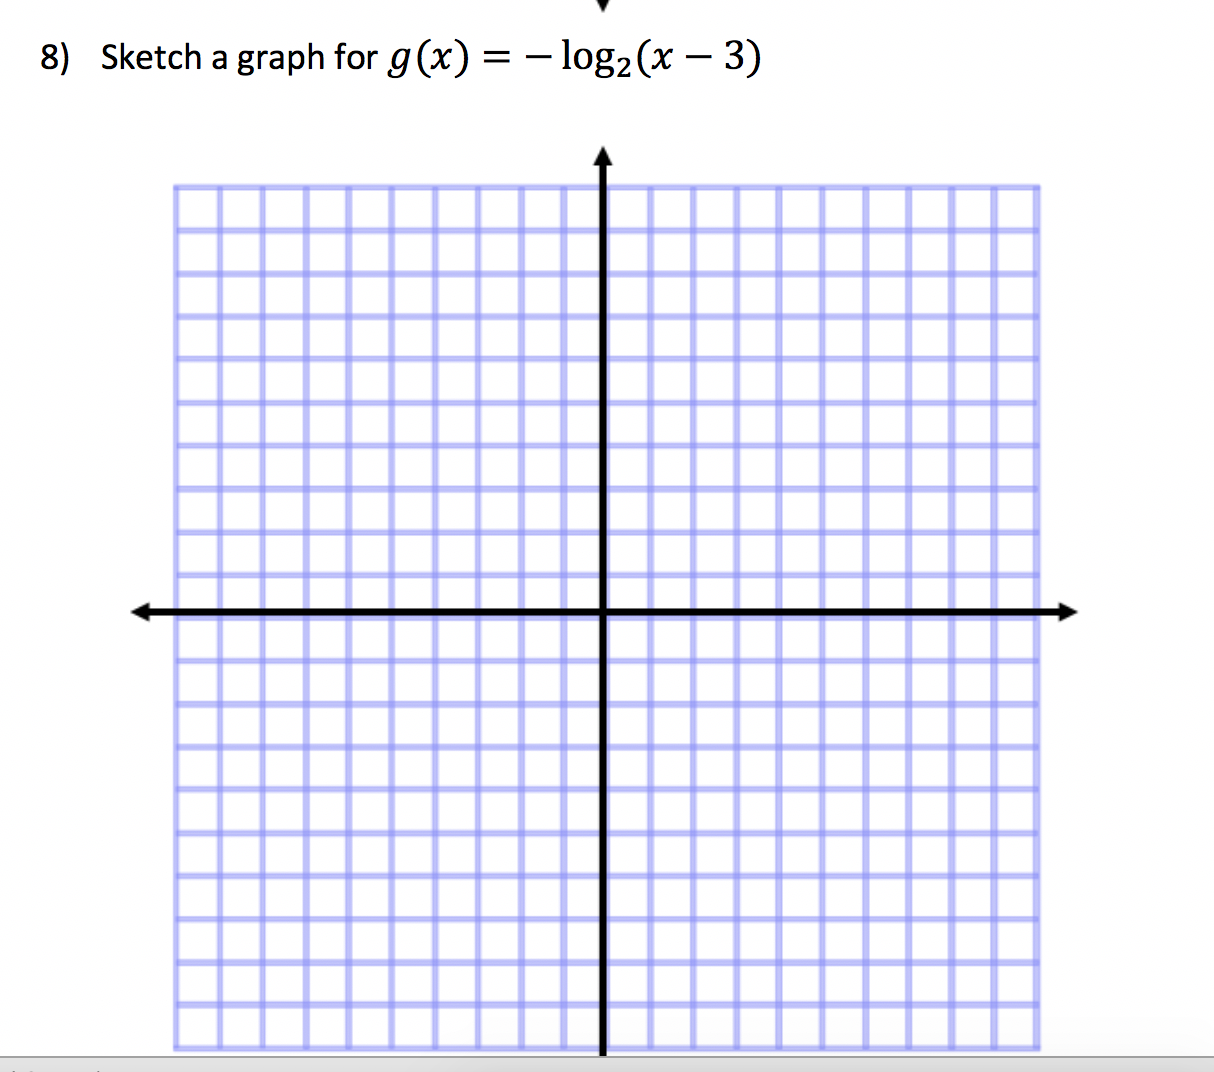 8) Sketch a graph for g (x) -log2(x - 3)
_
